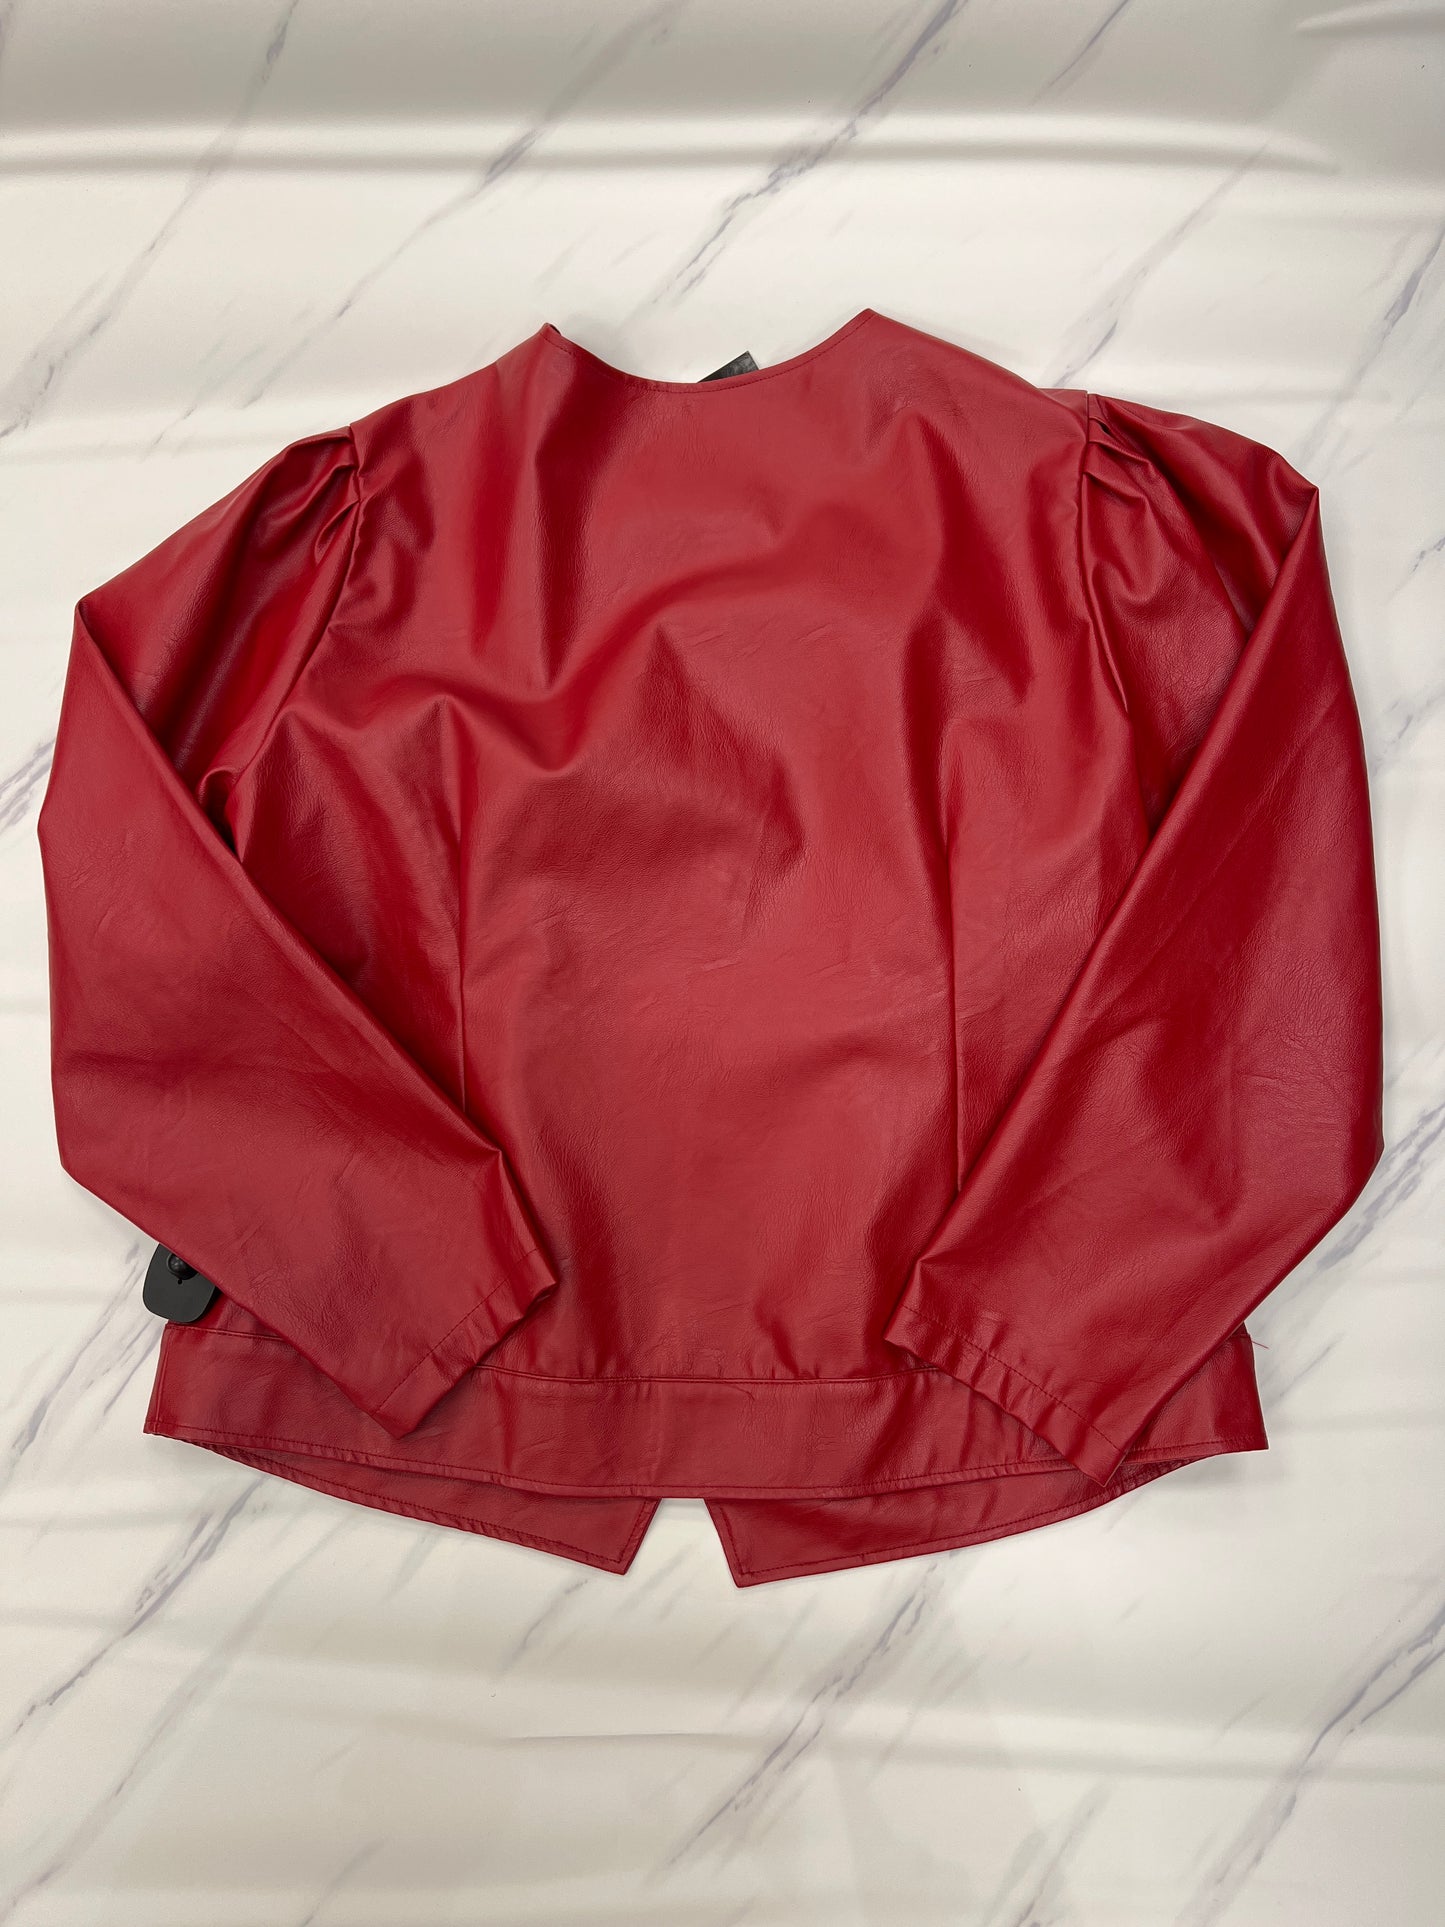 Jacket Moto By Ashley Stewart  Size: 16